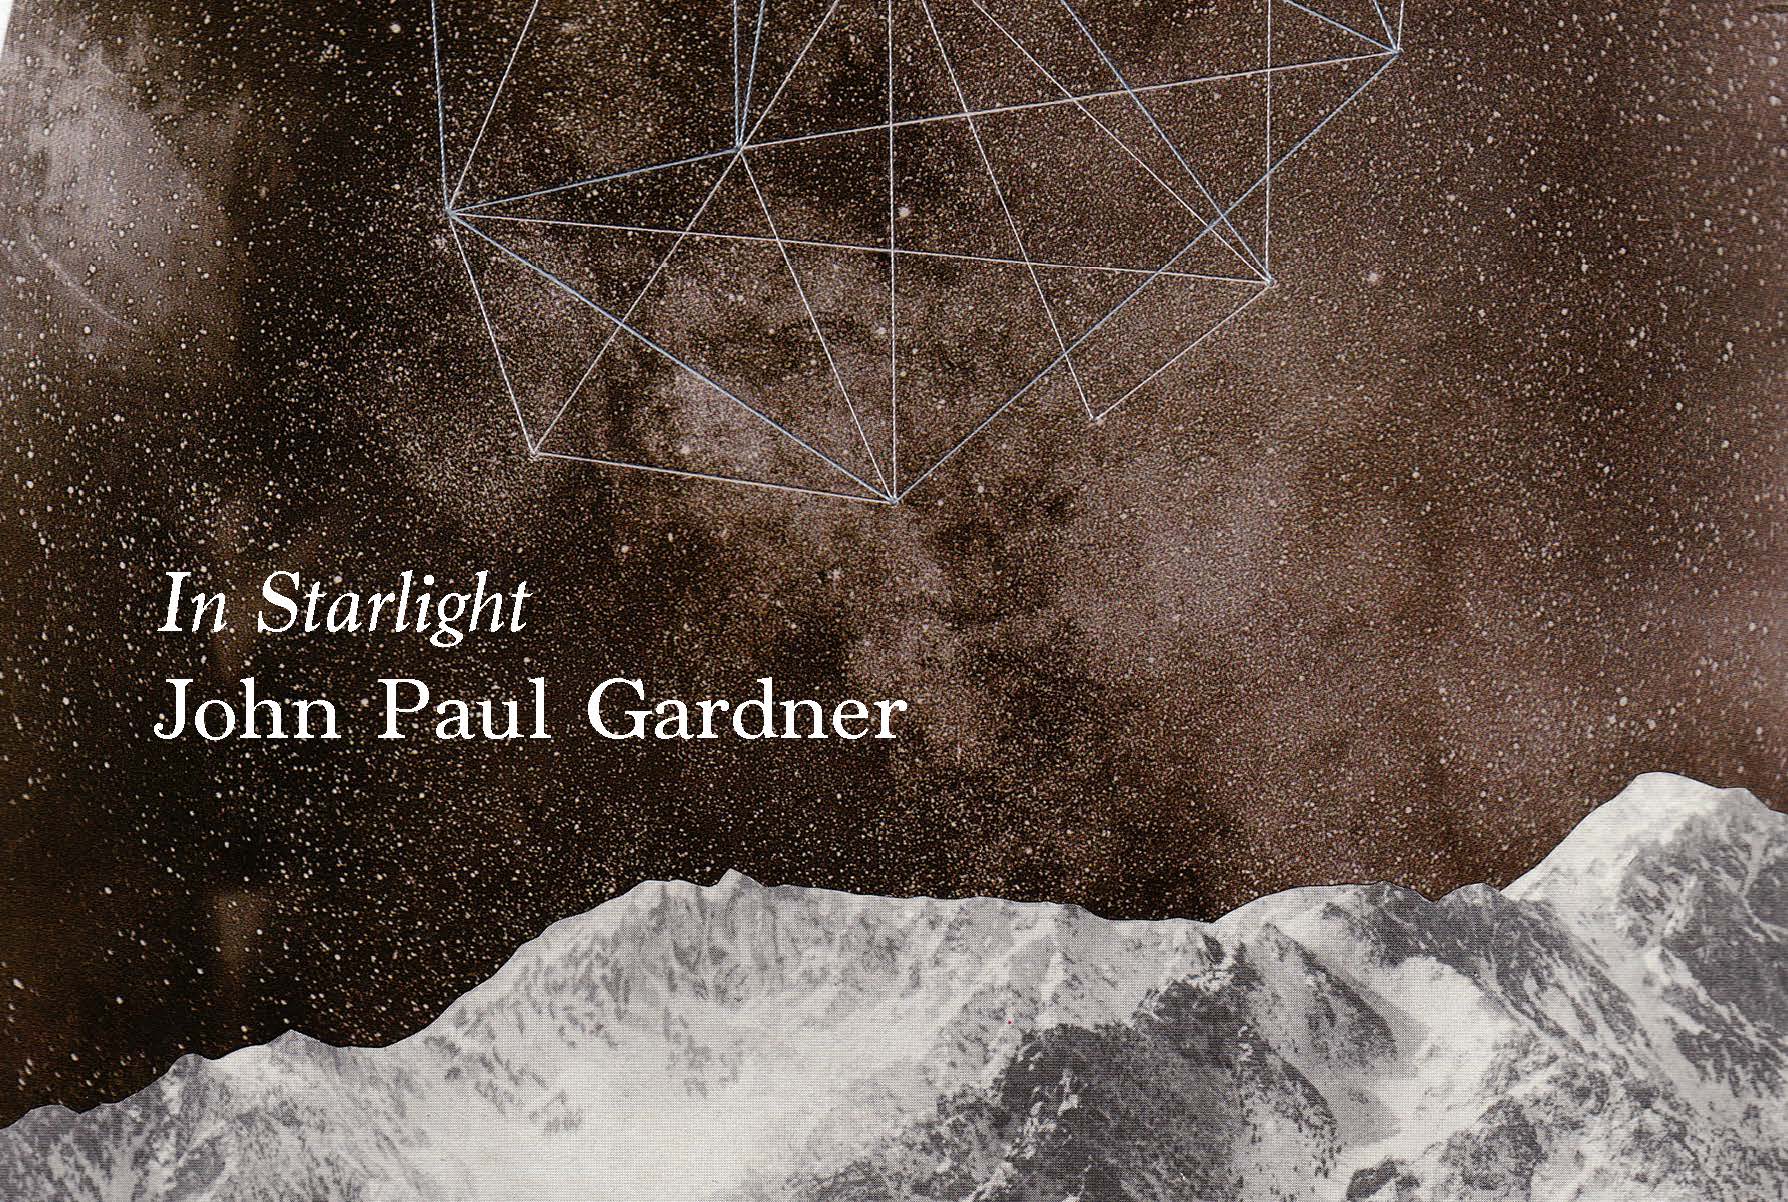 John Paul Gardner